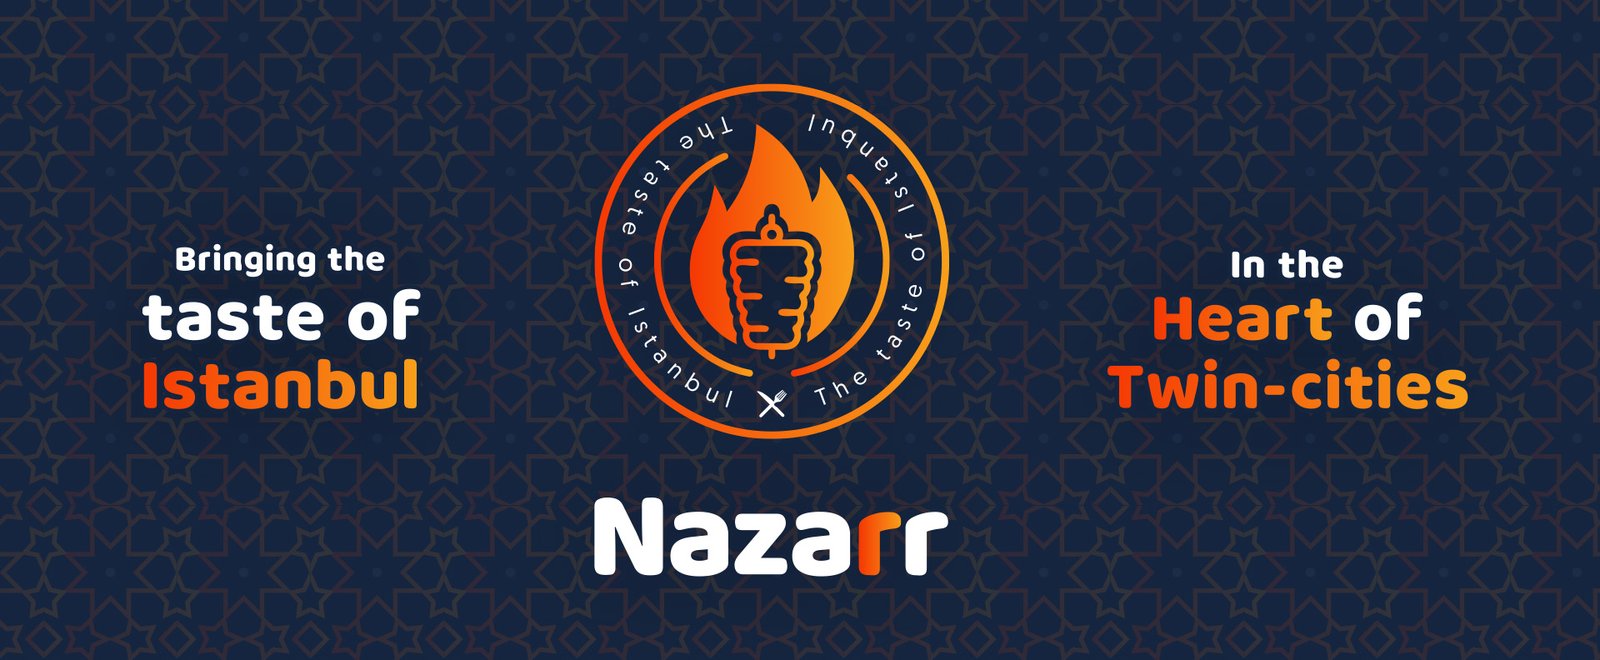 Nazarr- The Taste of Istanbul